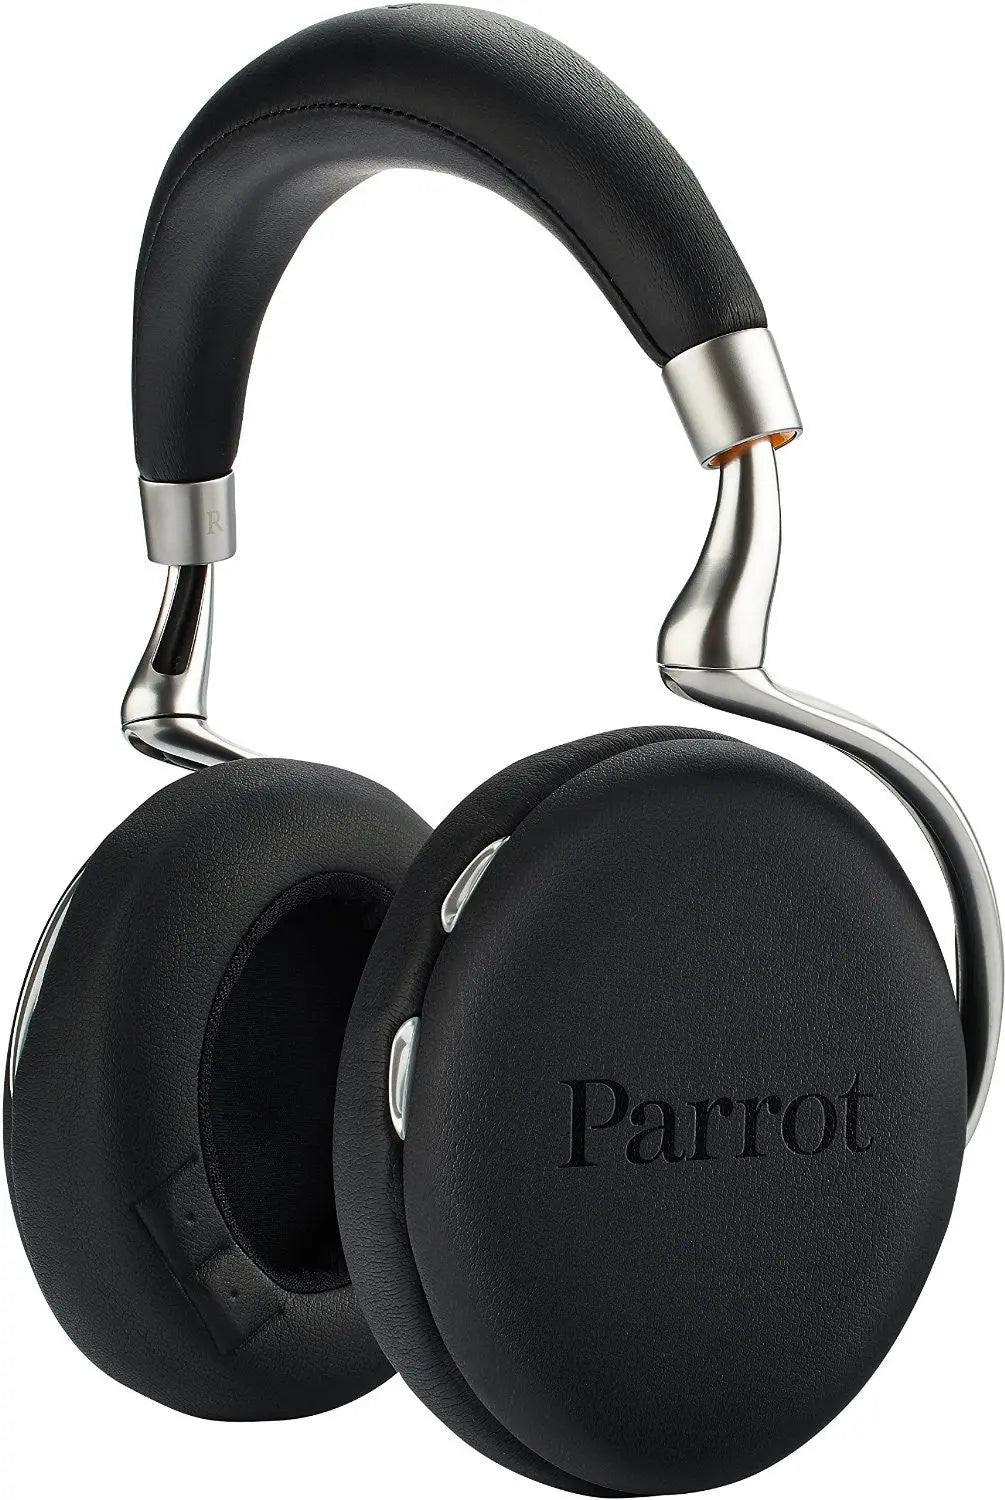 Parrot ZiK 2.0 by Philippe Starck Black - Casque audio Bluetooth Parrot